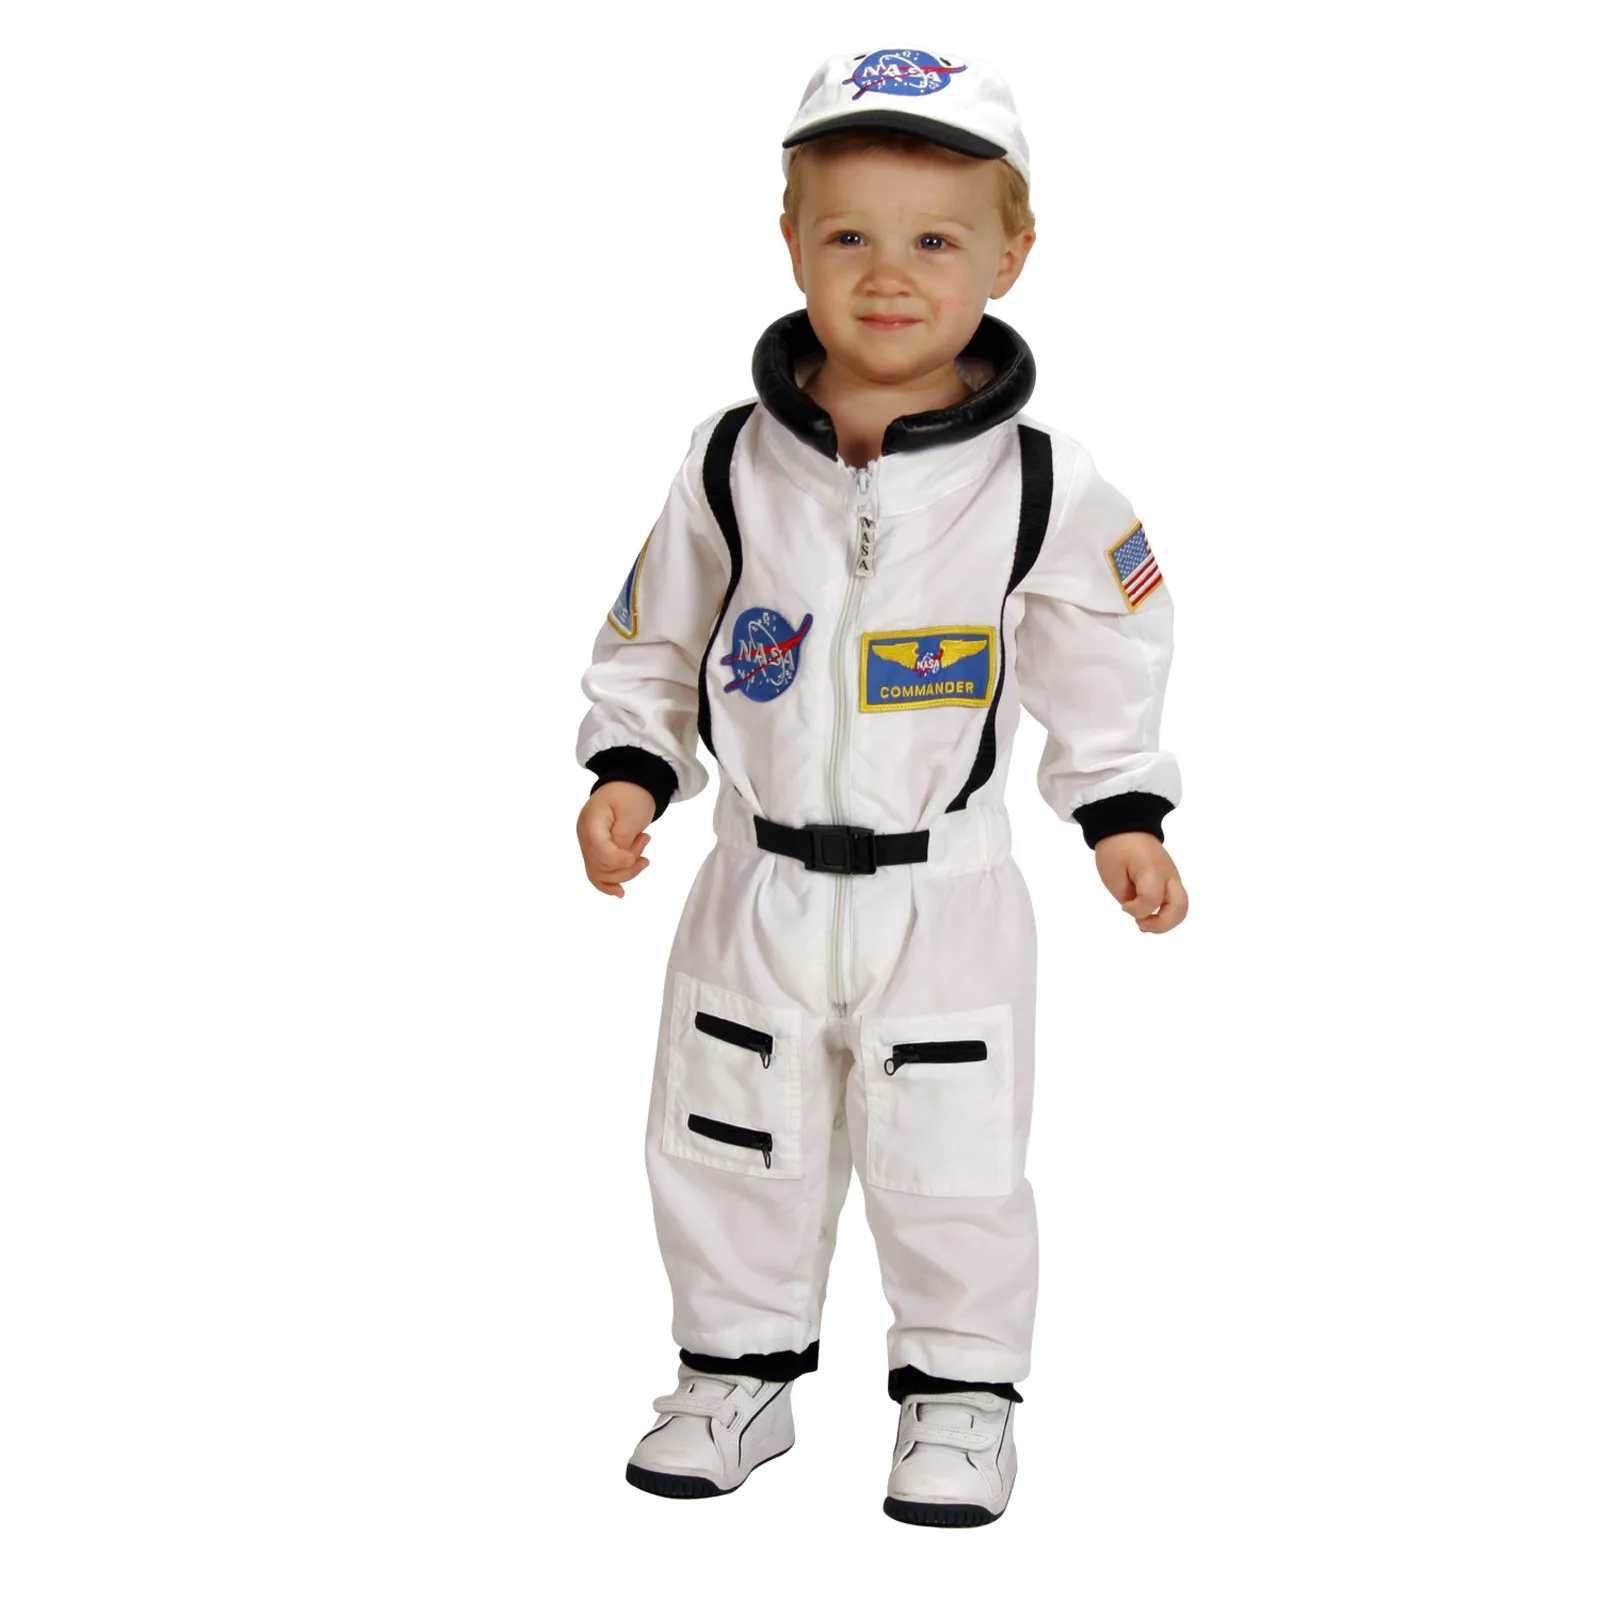 Костюм Космонавта. Костюм Космонавта для детей. Космический костюм для мальчика. Новогодний костюм Космонавта для мальчика. Детский костюм космонавта своими руками